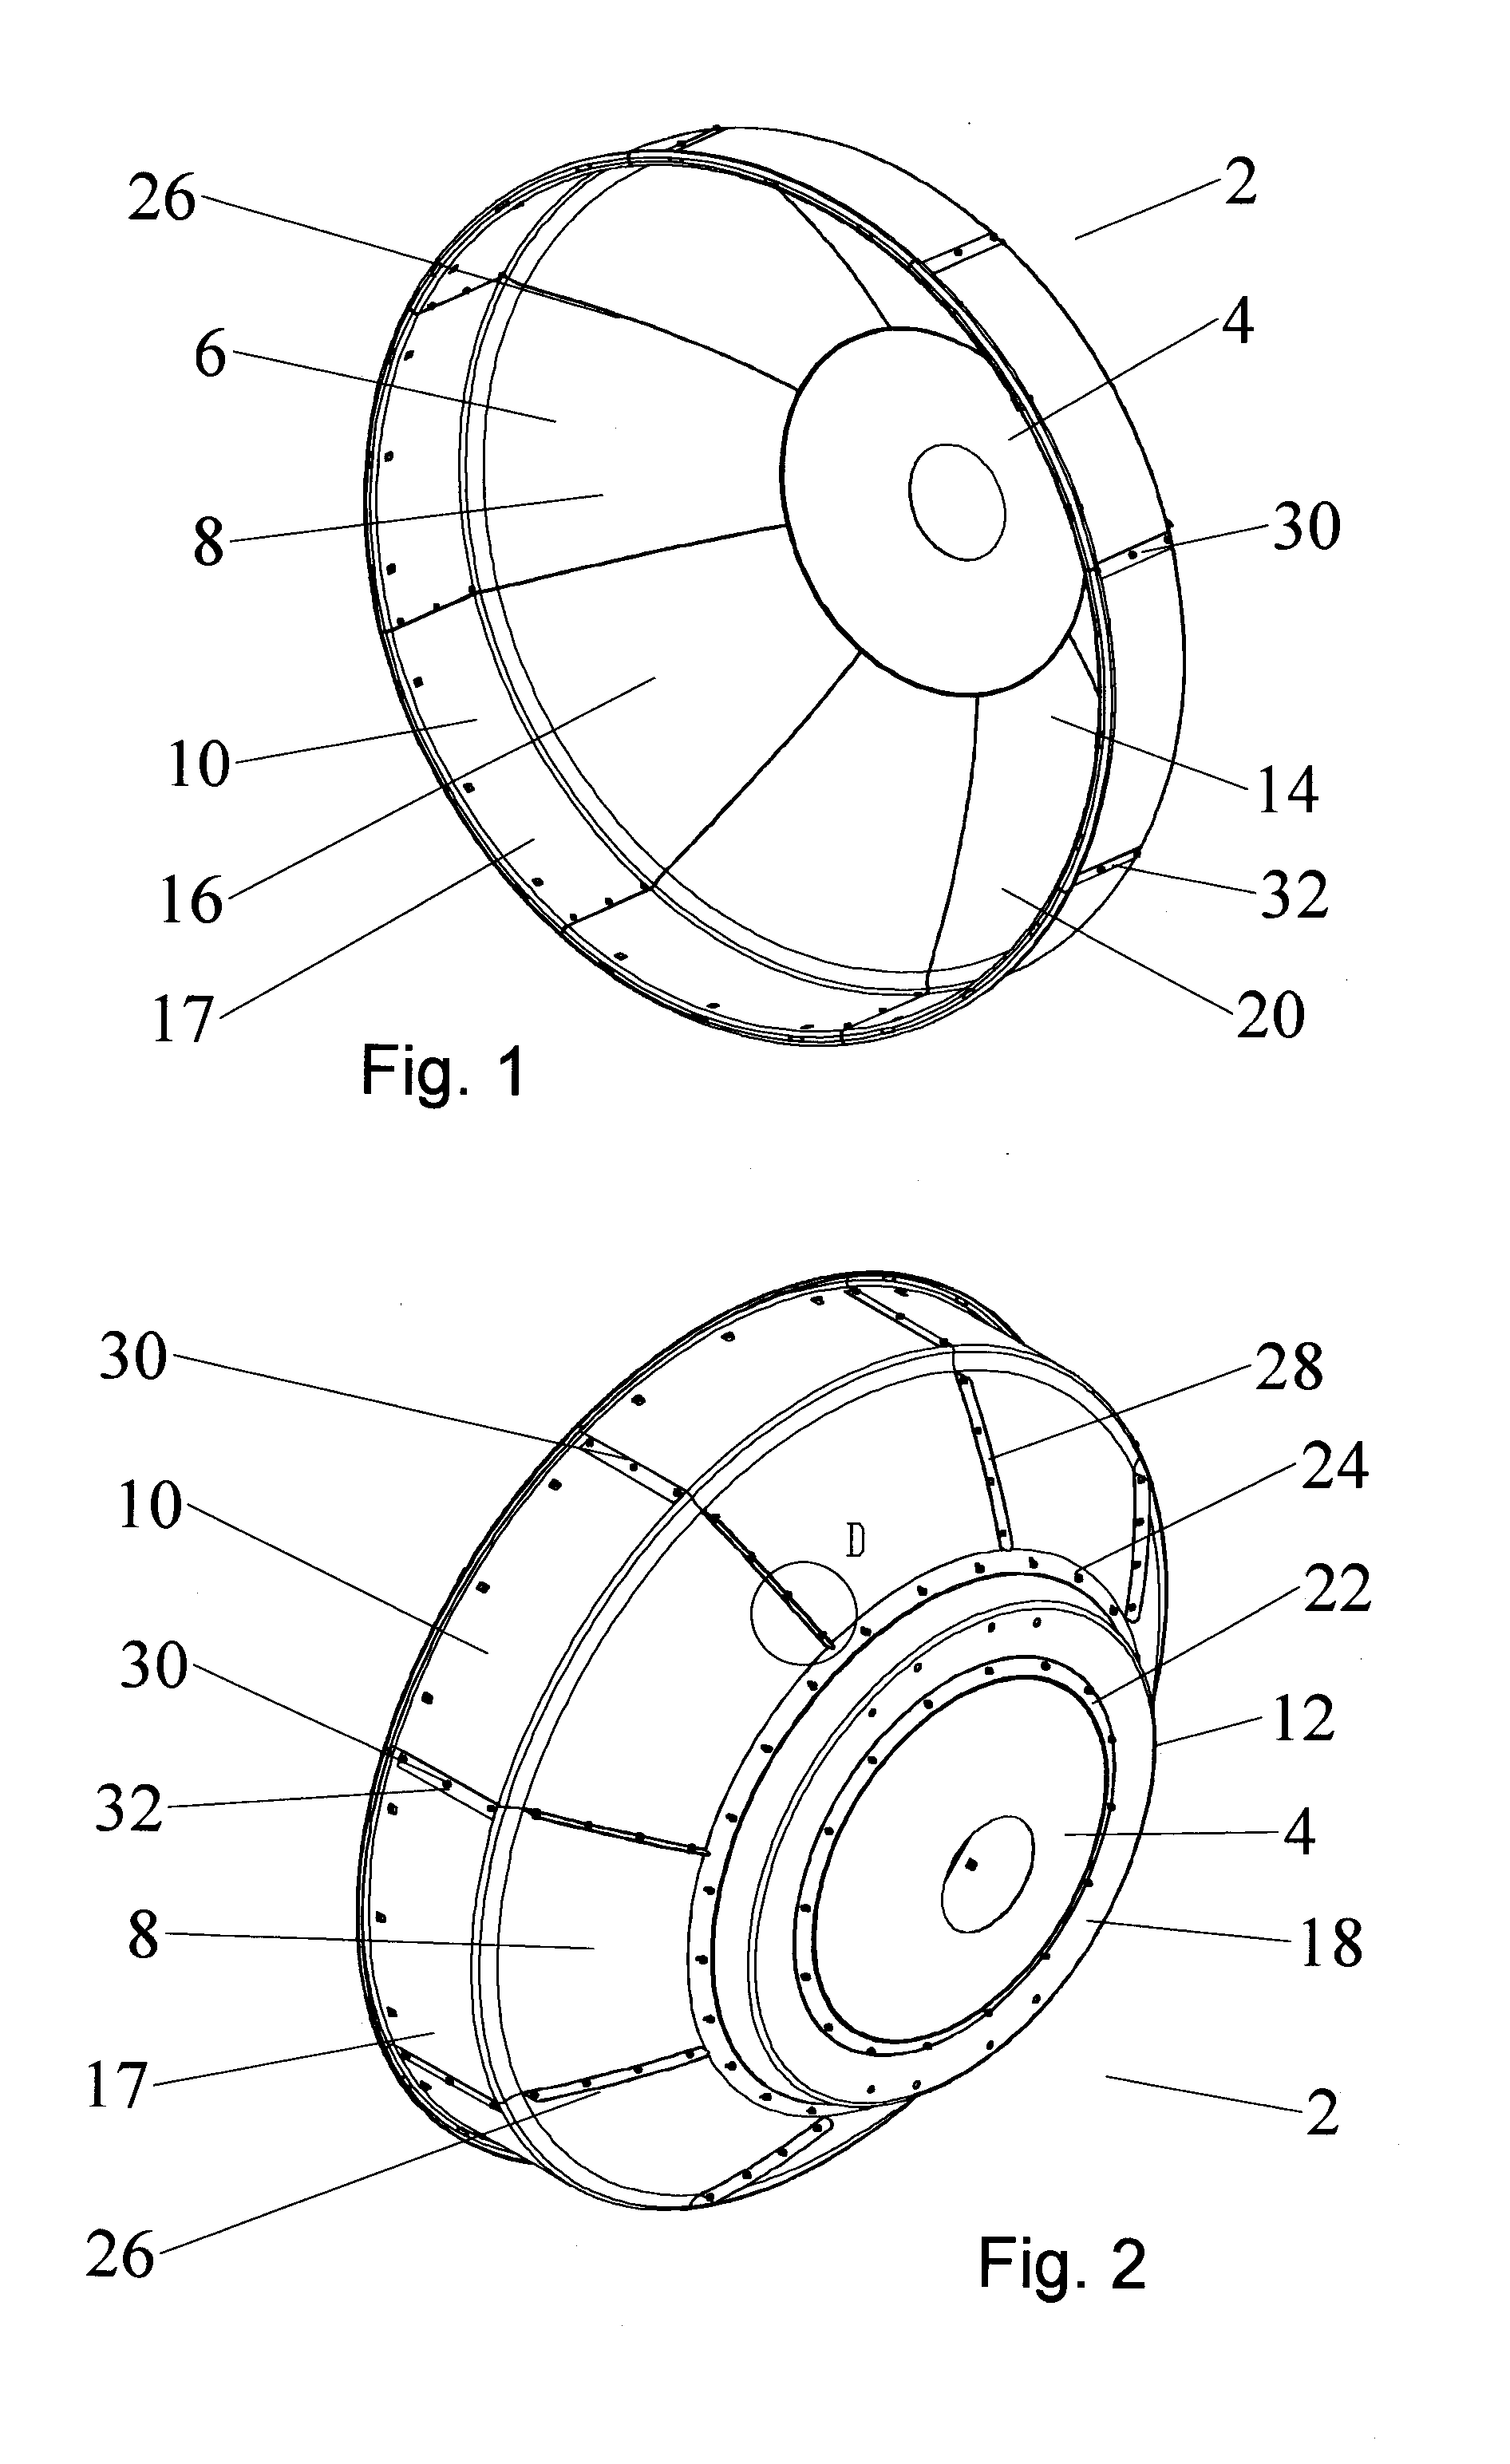 Segmented antenna reflector with shield